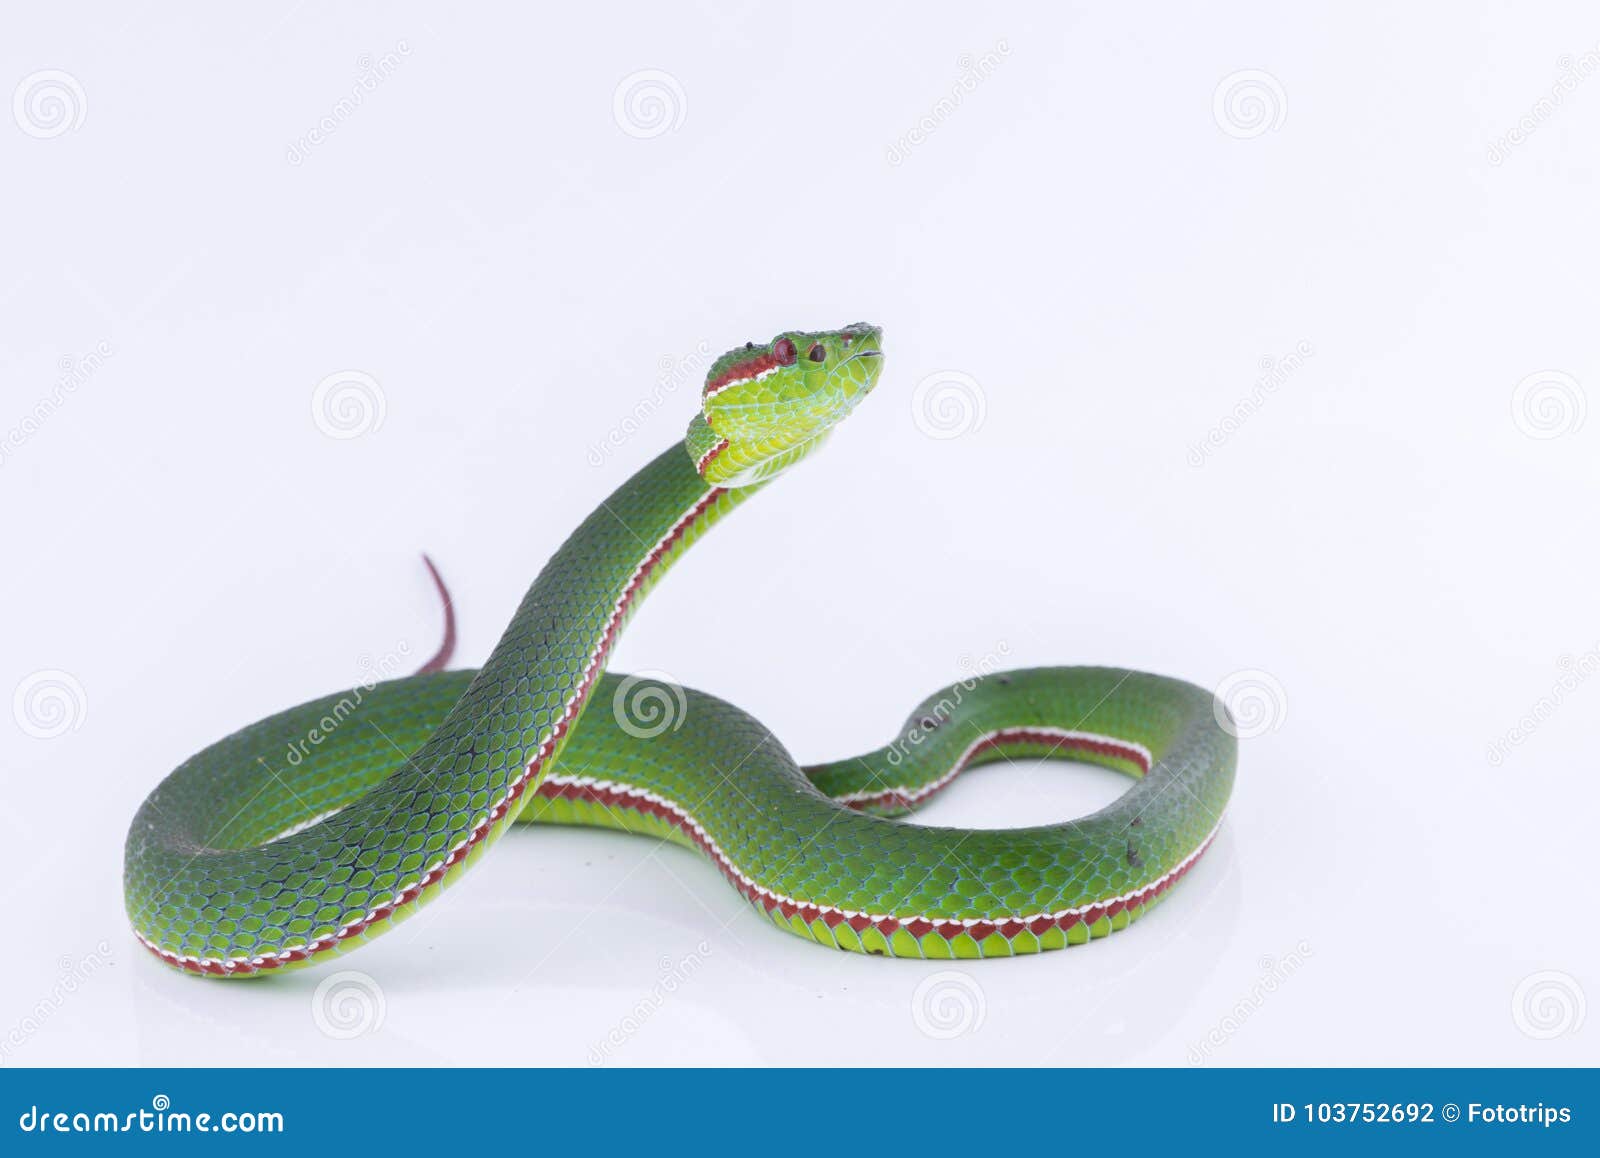 Green Pit Viper Bites On White Background Snake Of Thailand Stock